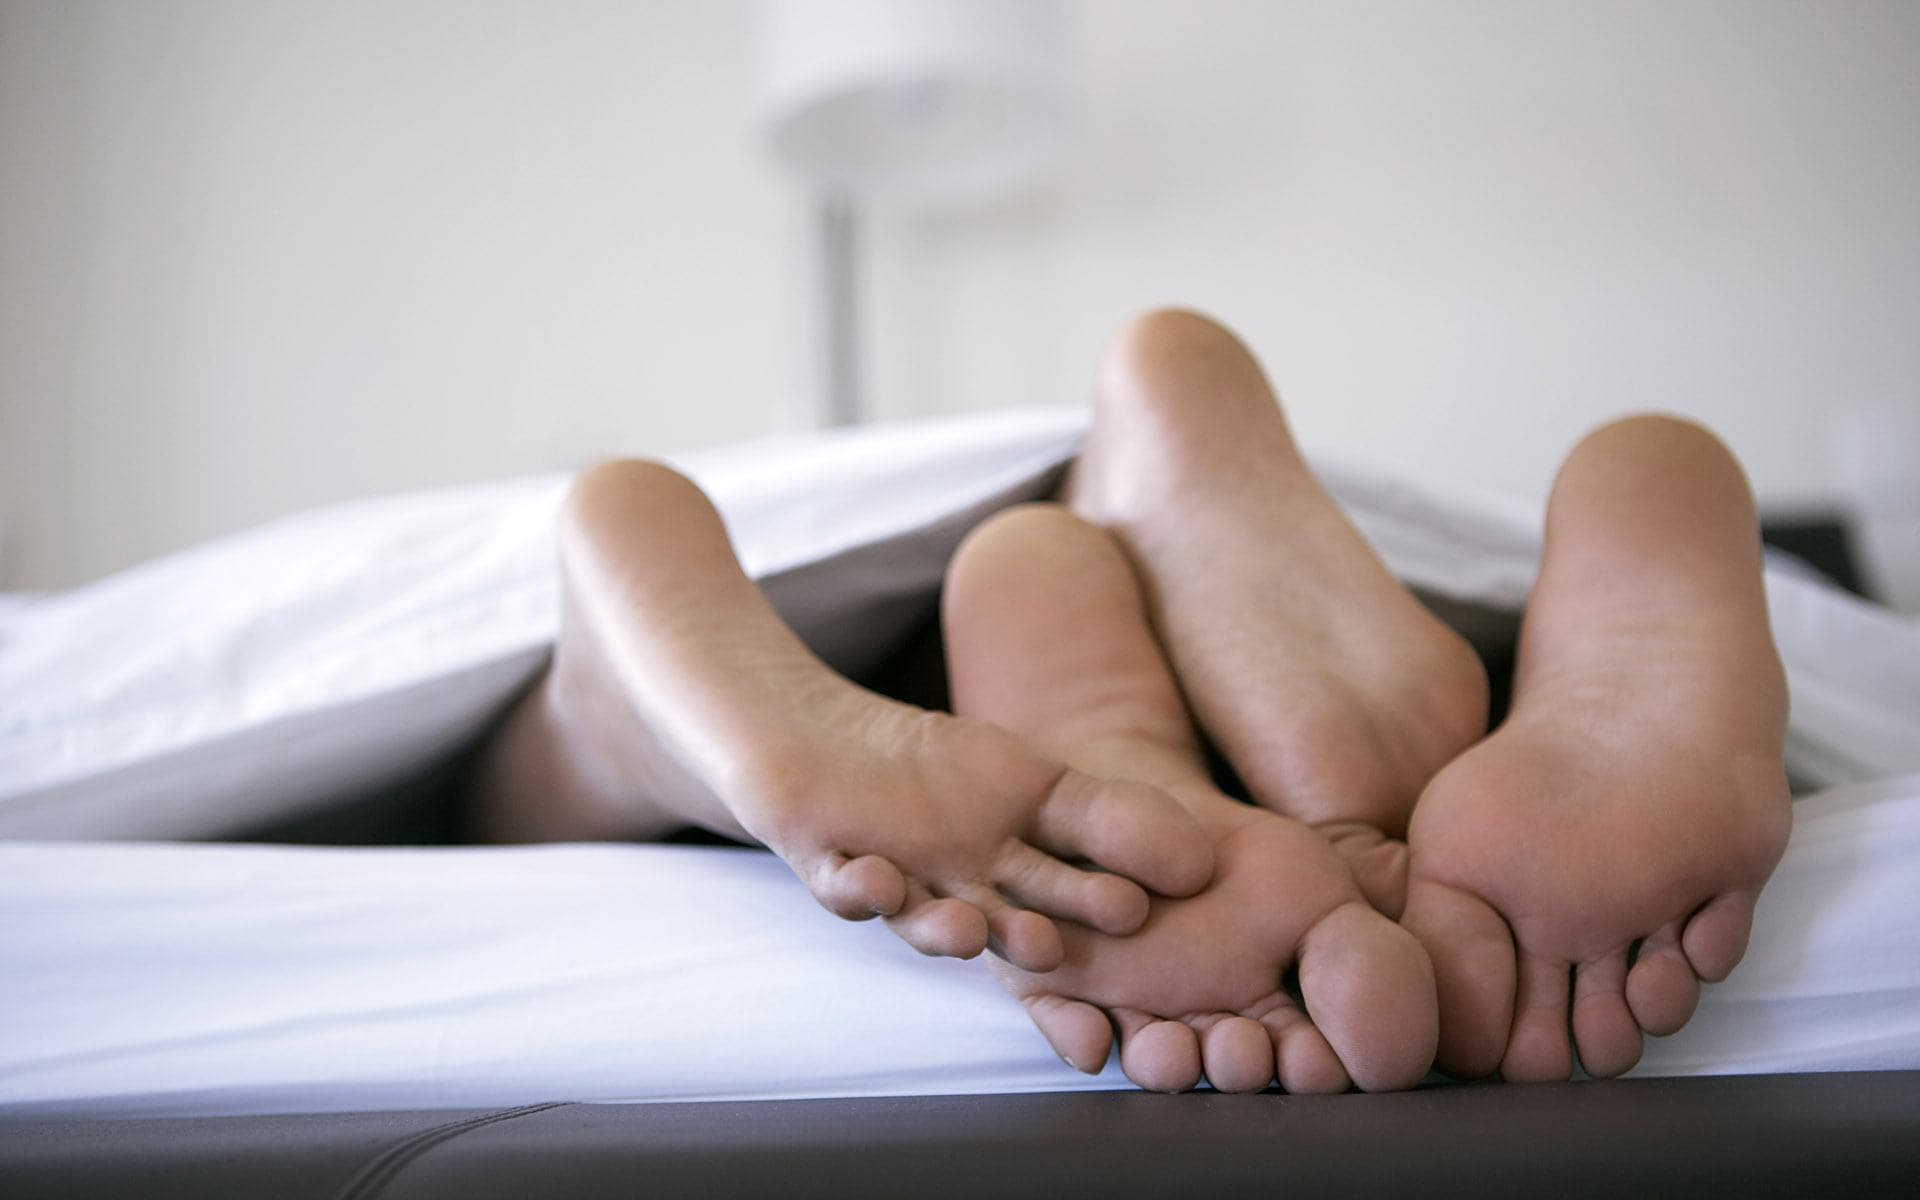 Feet картинка. Мужские и женские ступни. Ноги на кровати. Пятки под одеялом. Мужские и женские ноги в кровати.